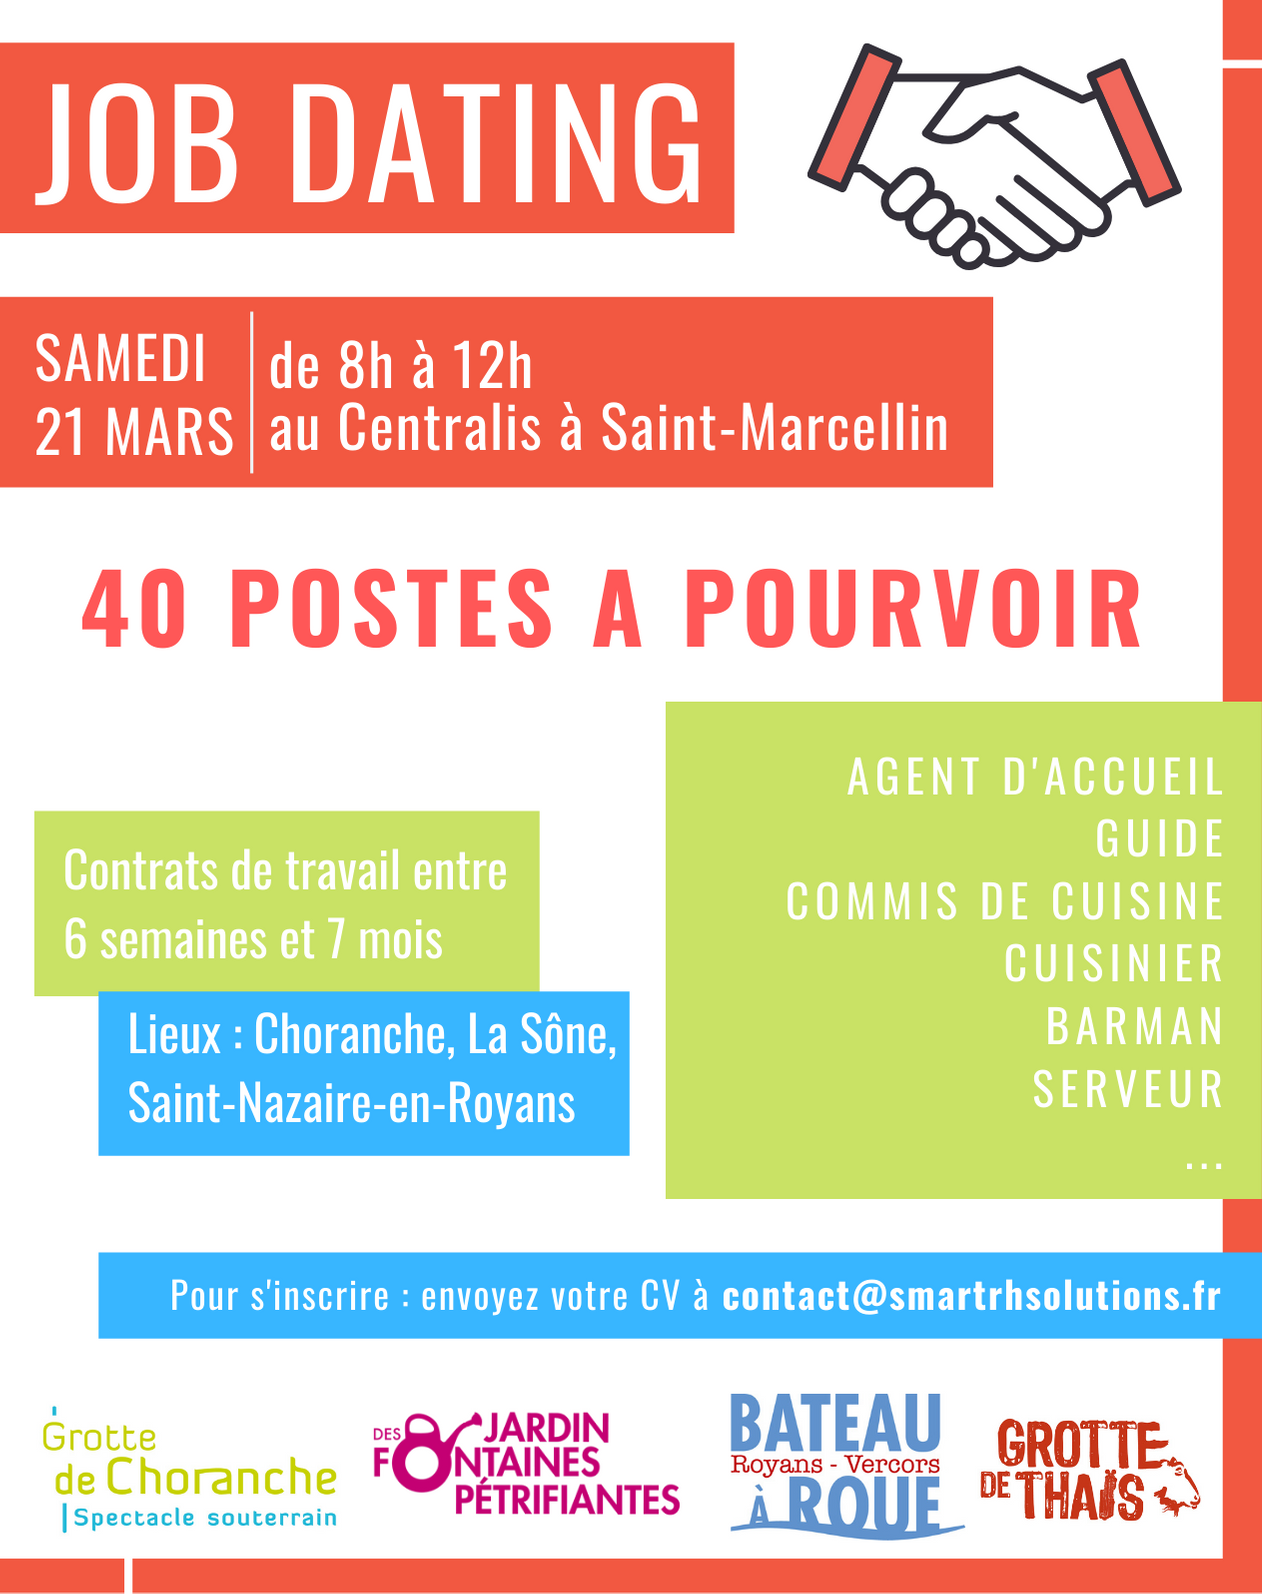 Job dating Saint-Marcellin